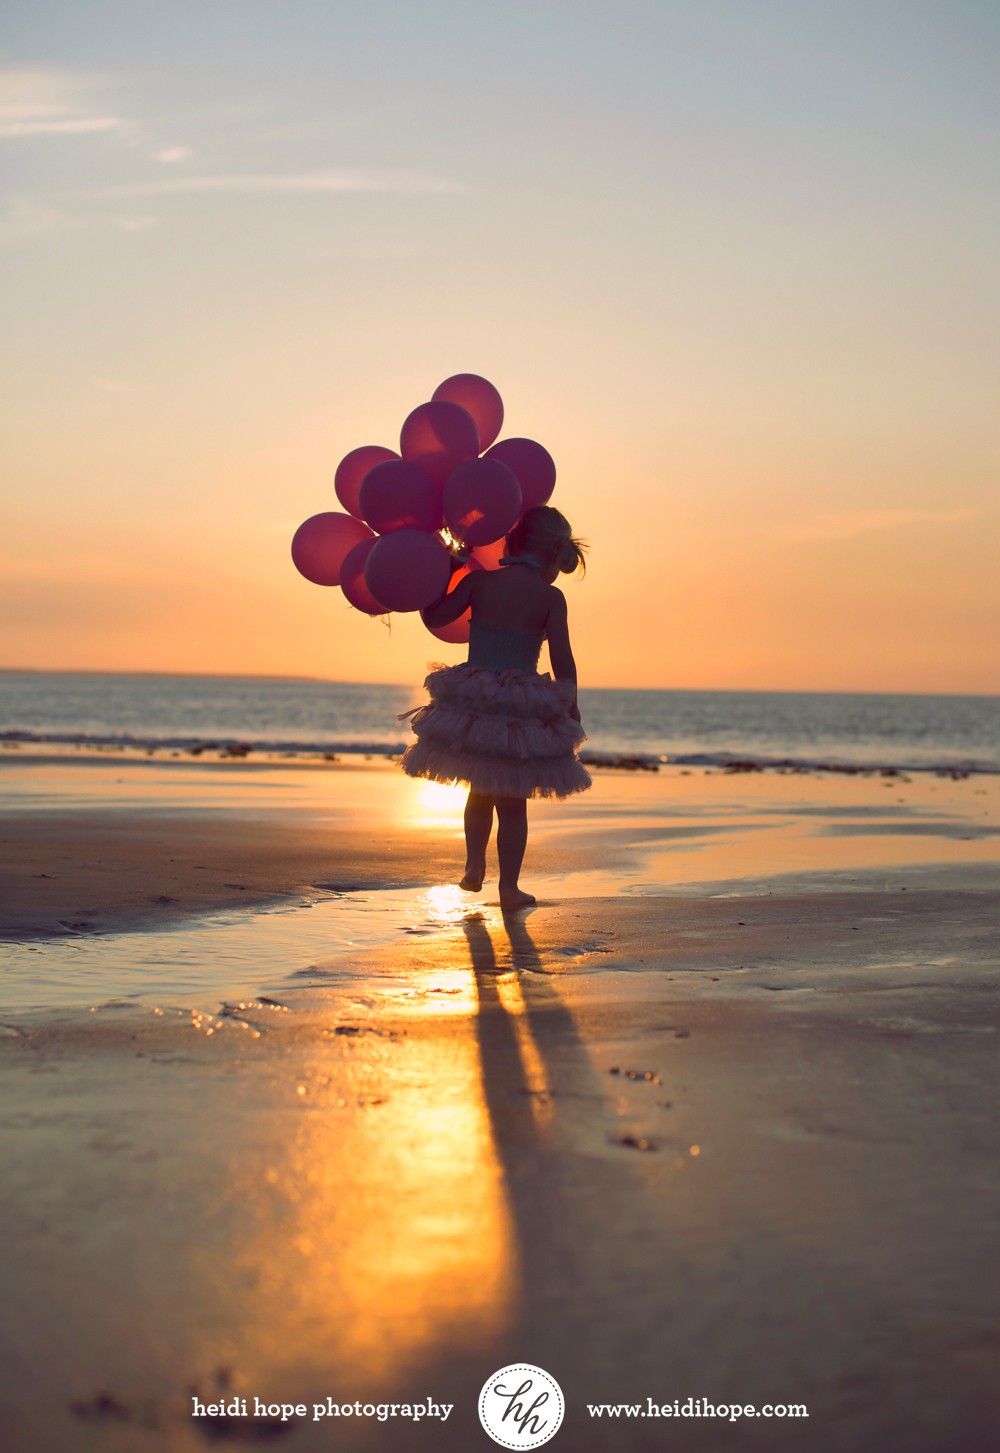 birthday girl holding balloons at the beach at sunrise by #heidihopephotography